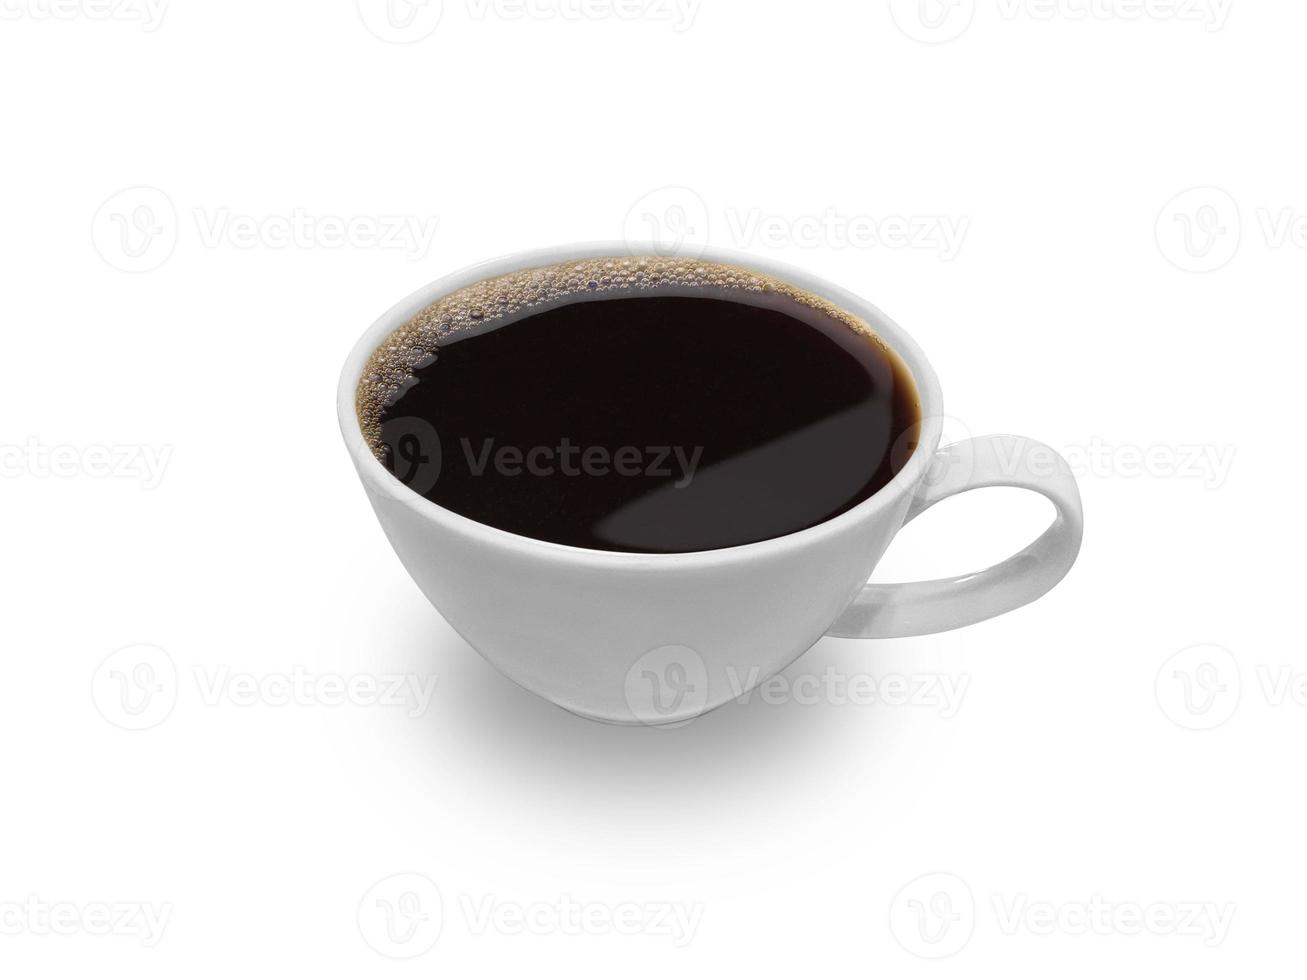 taza de café aislado sobre fondo blanco foto